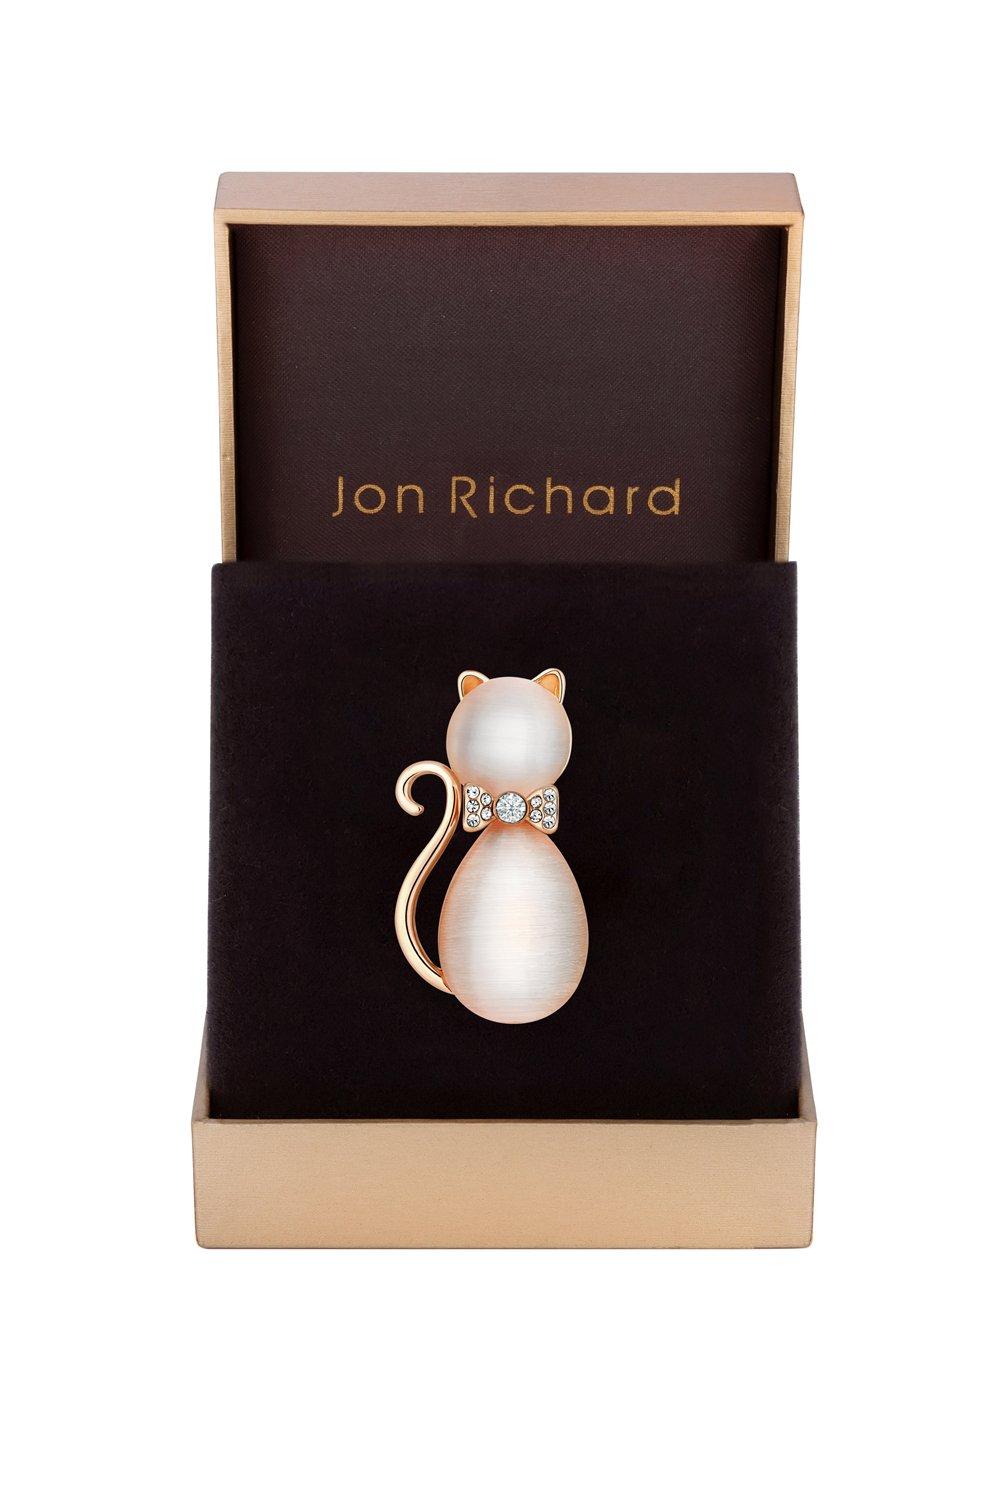 Jon Richard Women's Rose Gold Pink Crystal Cat Brooch - Gift Boxed|rose gold